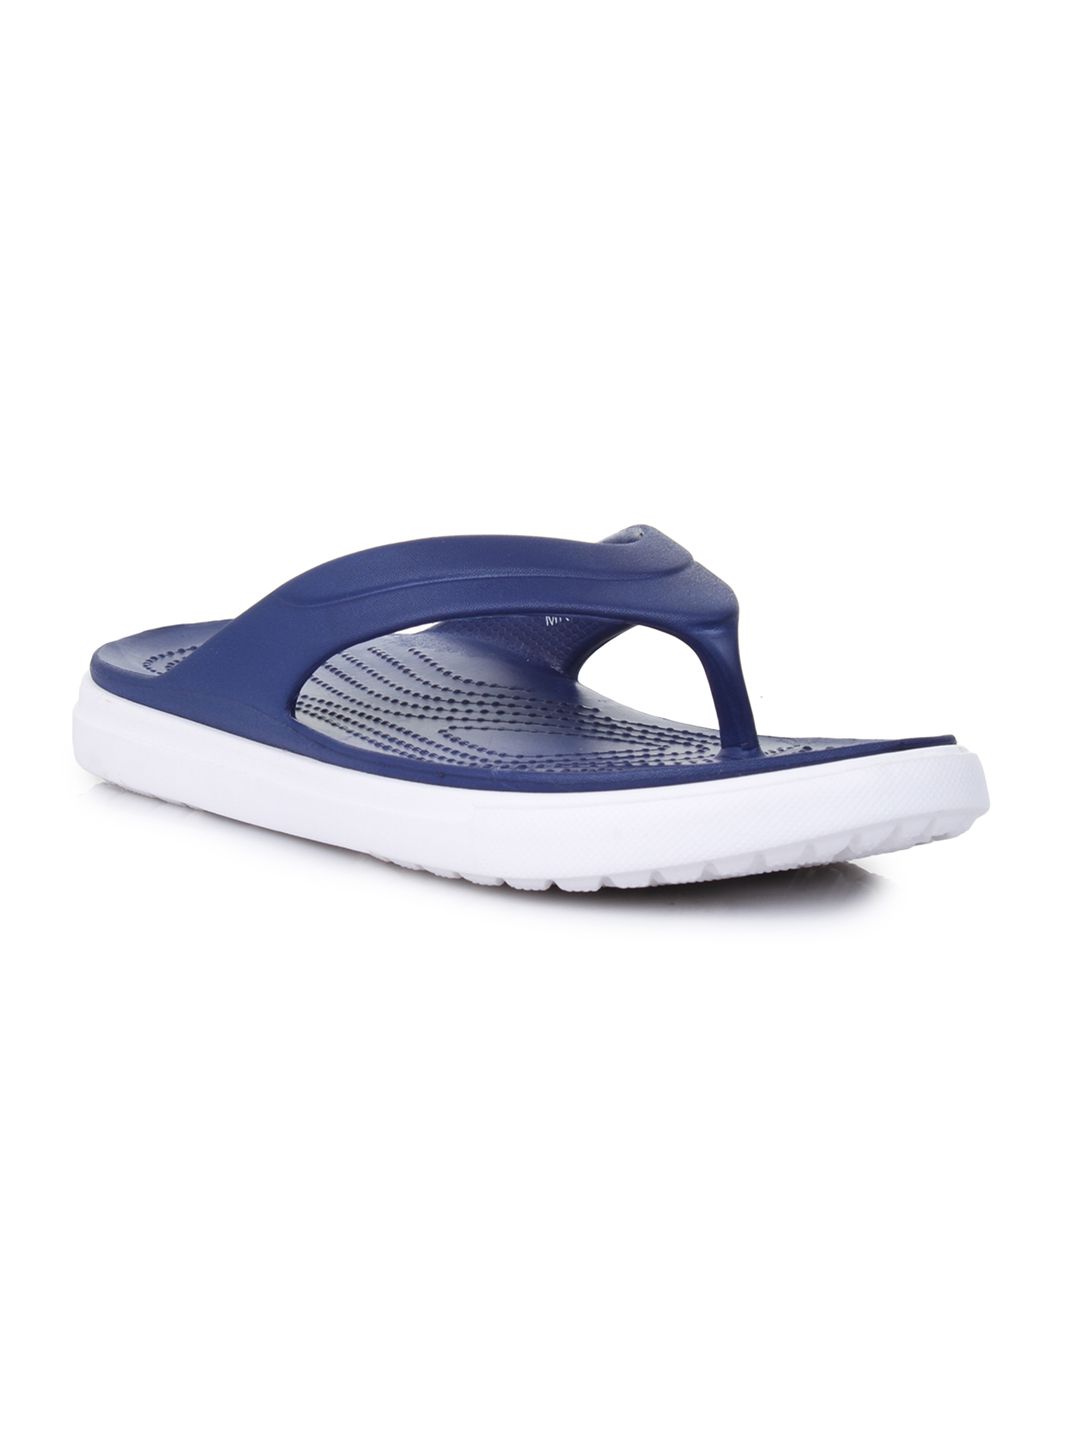 Buy AHA By Liberty Blue Sandals 